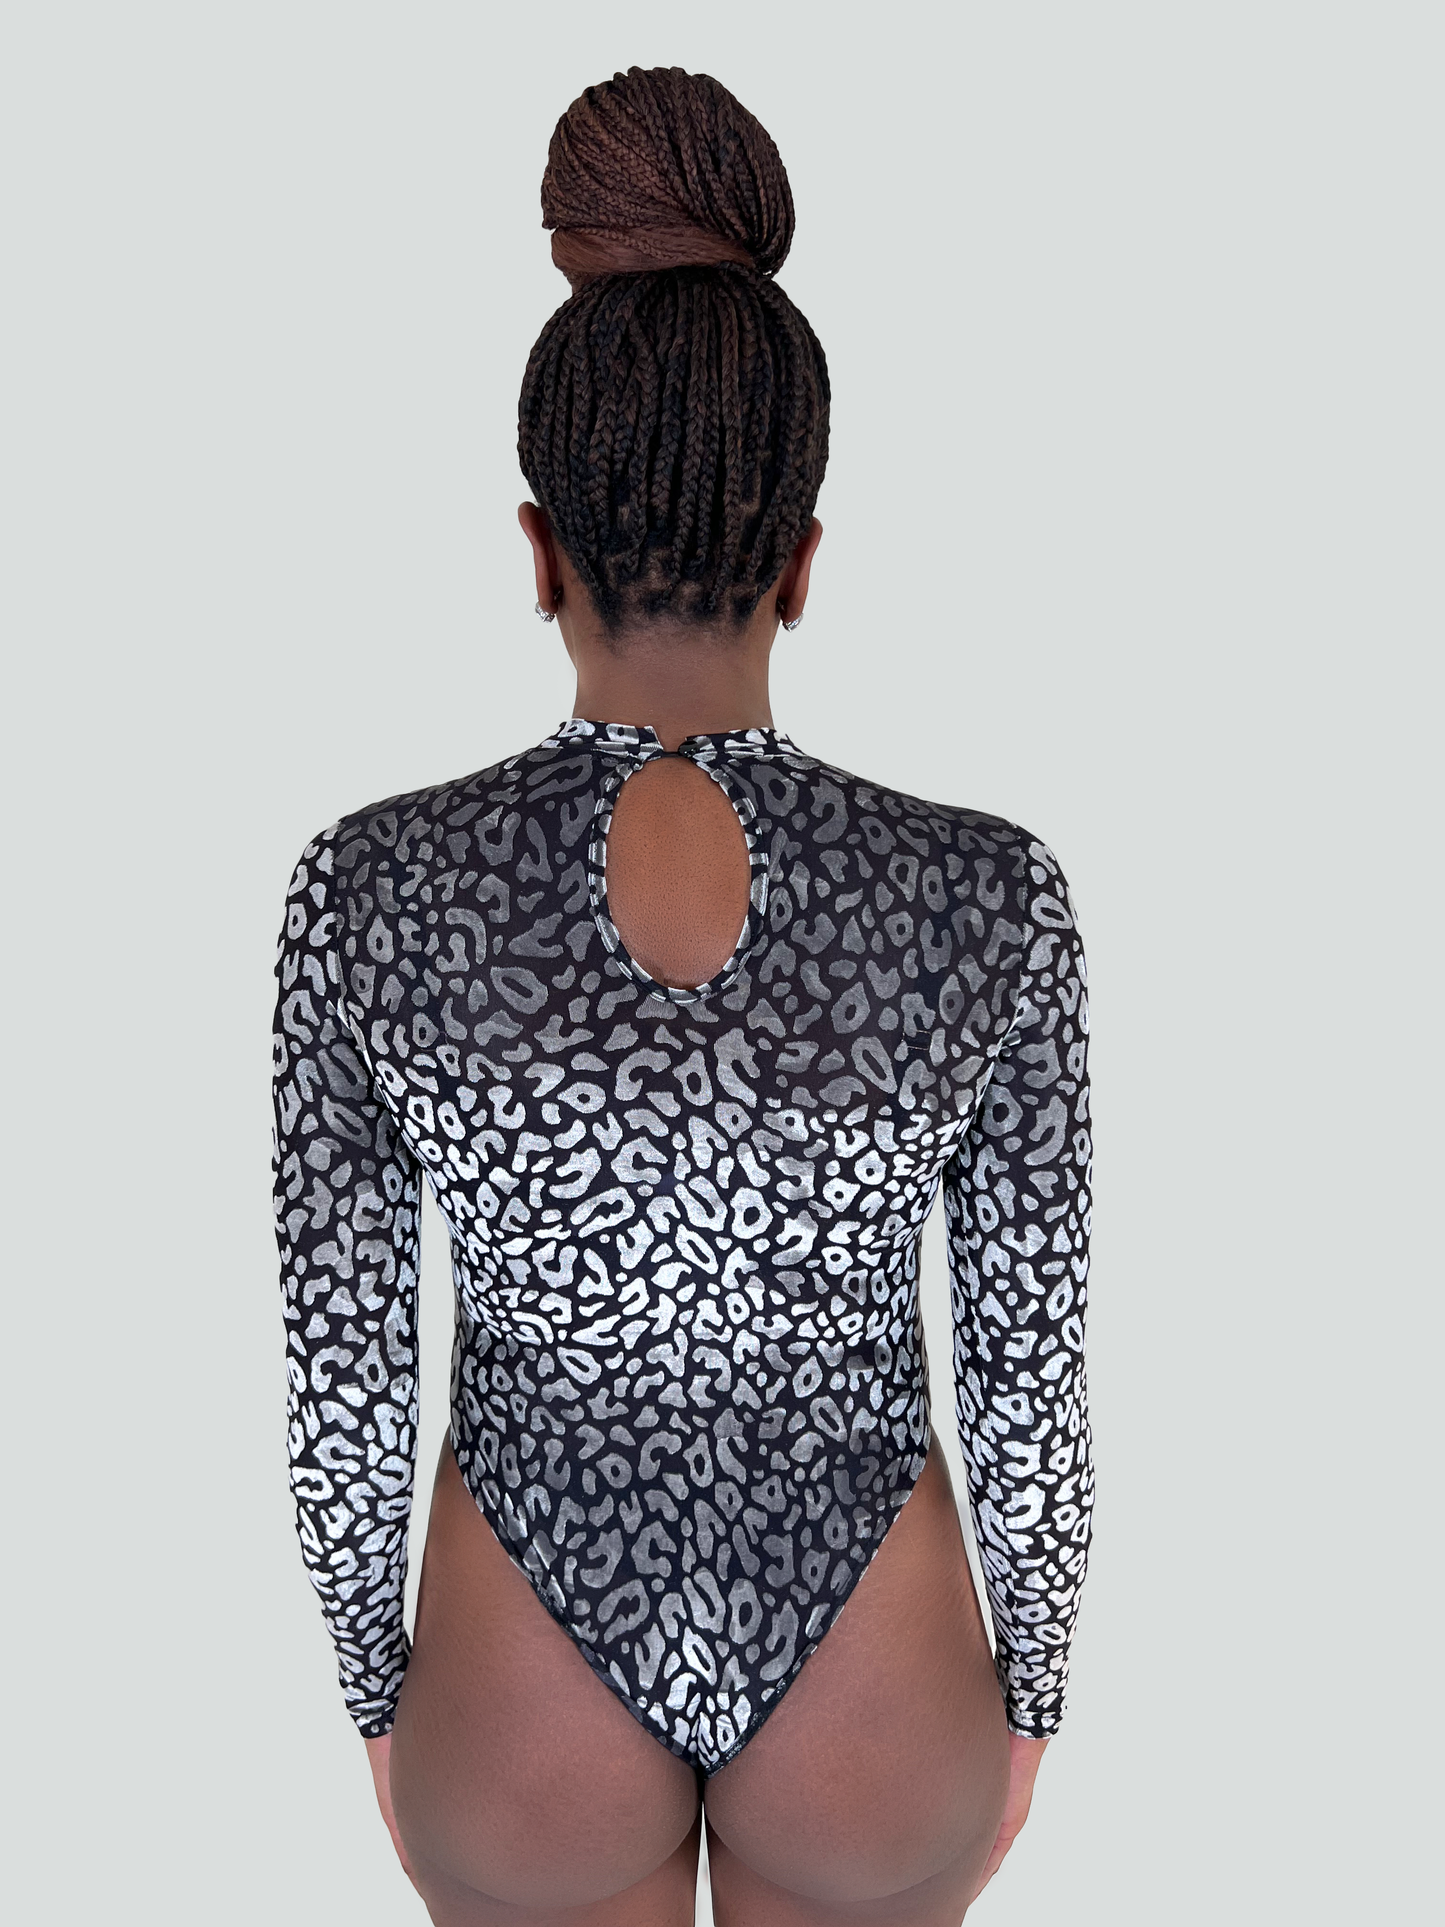 gray leopard print bodysuit